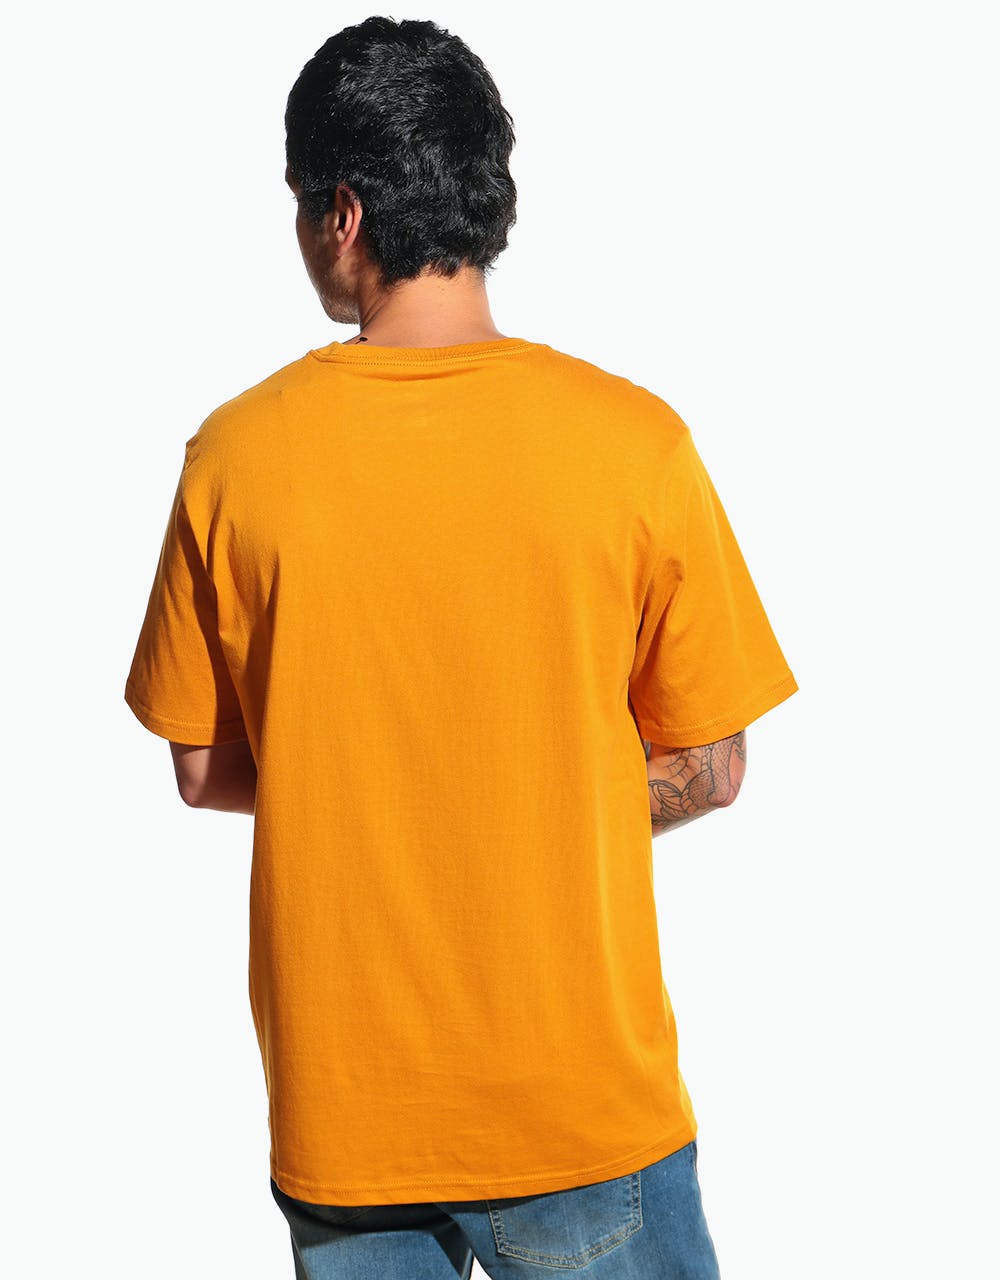 Converse Embroidered Star Chevron Left Chest T-Shirt - Saffron Yellow